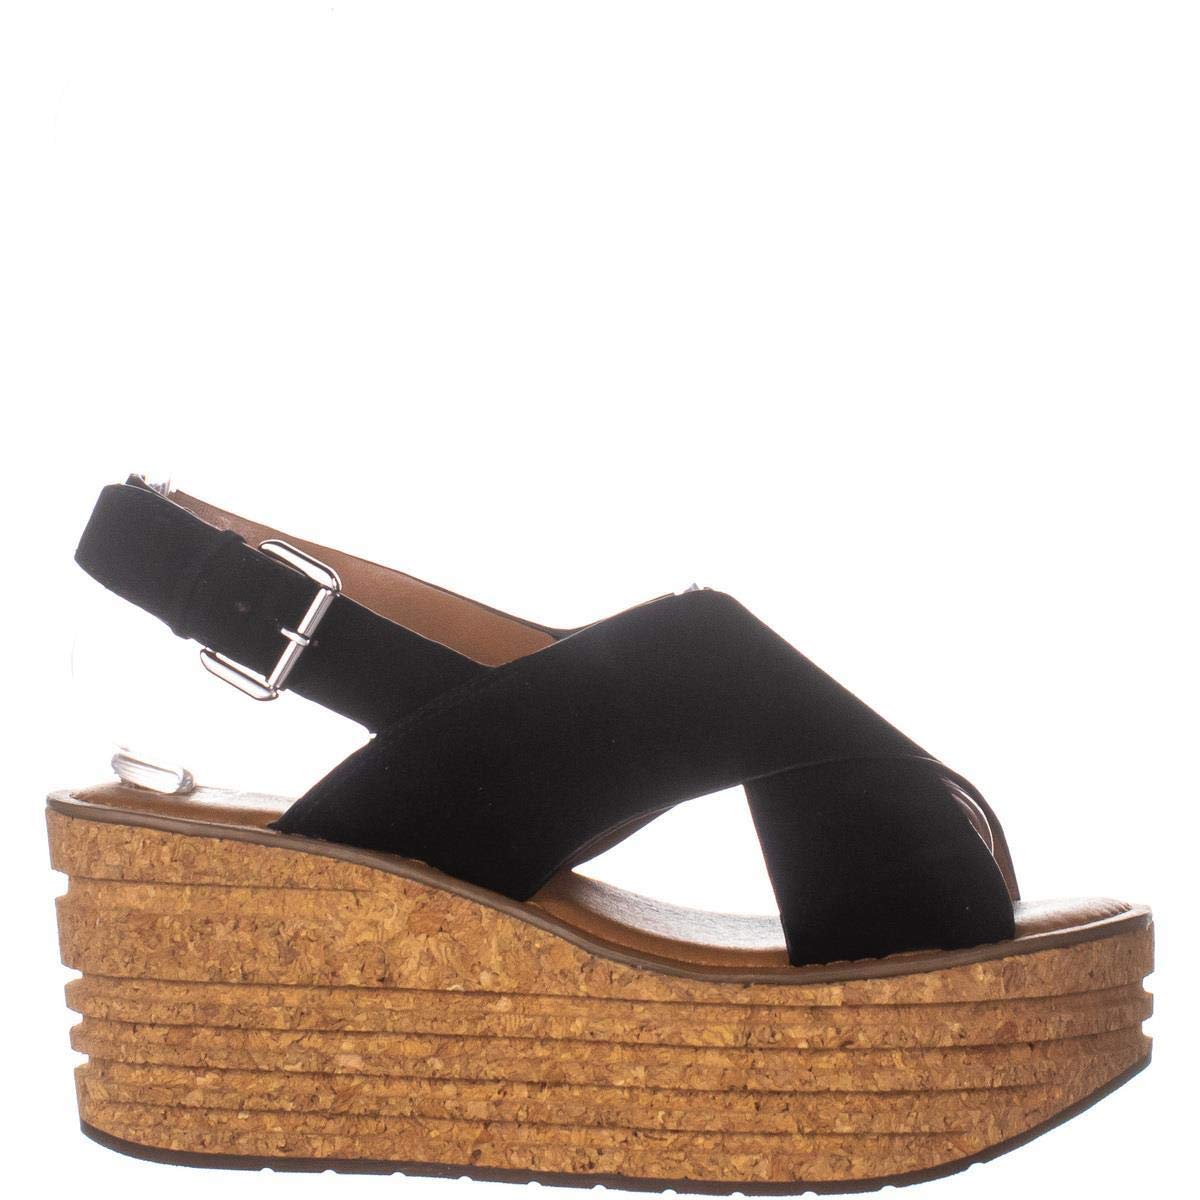 Franco Sarto Womens Platform Sandals in Black Color, Size 7.5 SOI | eBay